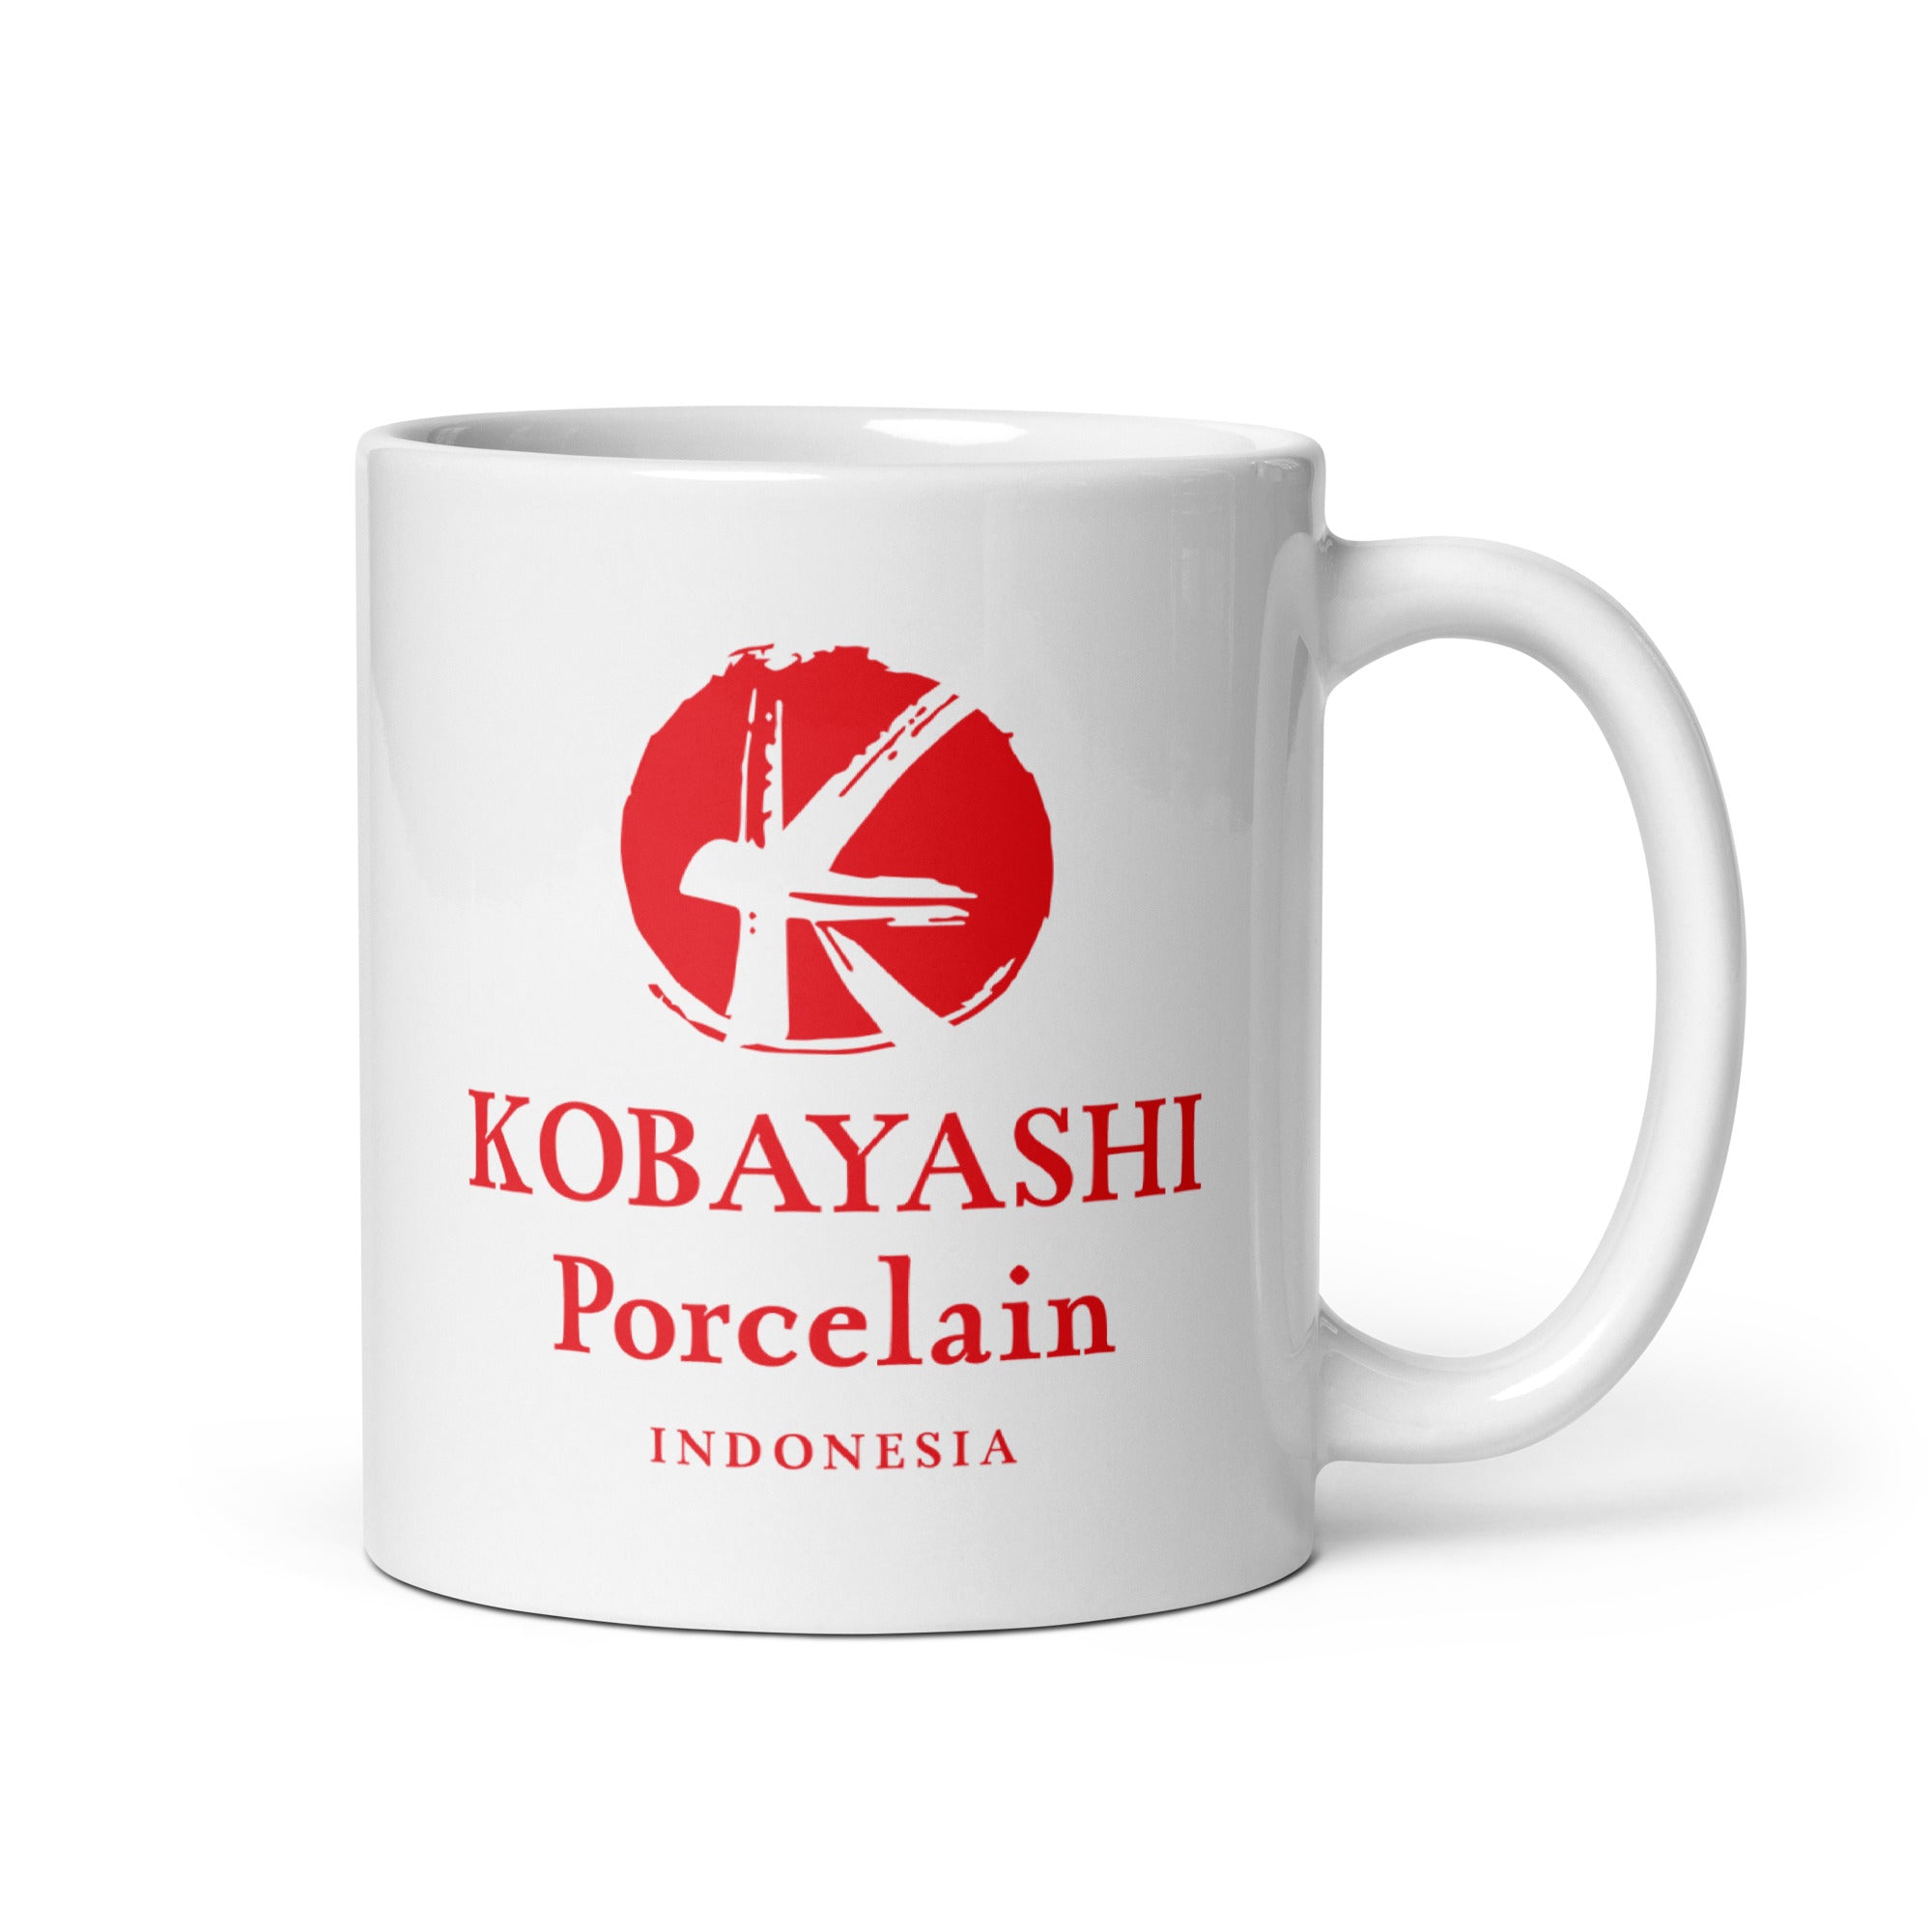 Kobayashi Porcelain - 11oz Coffee Mug